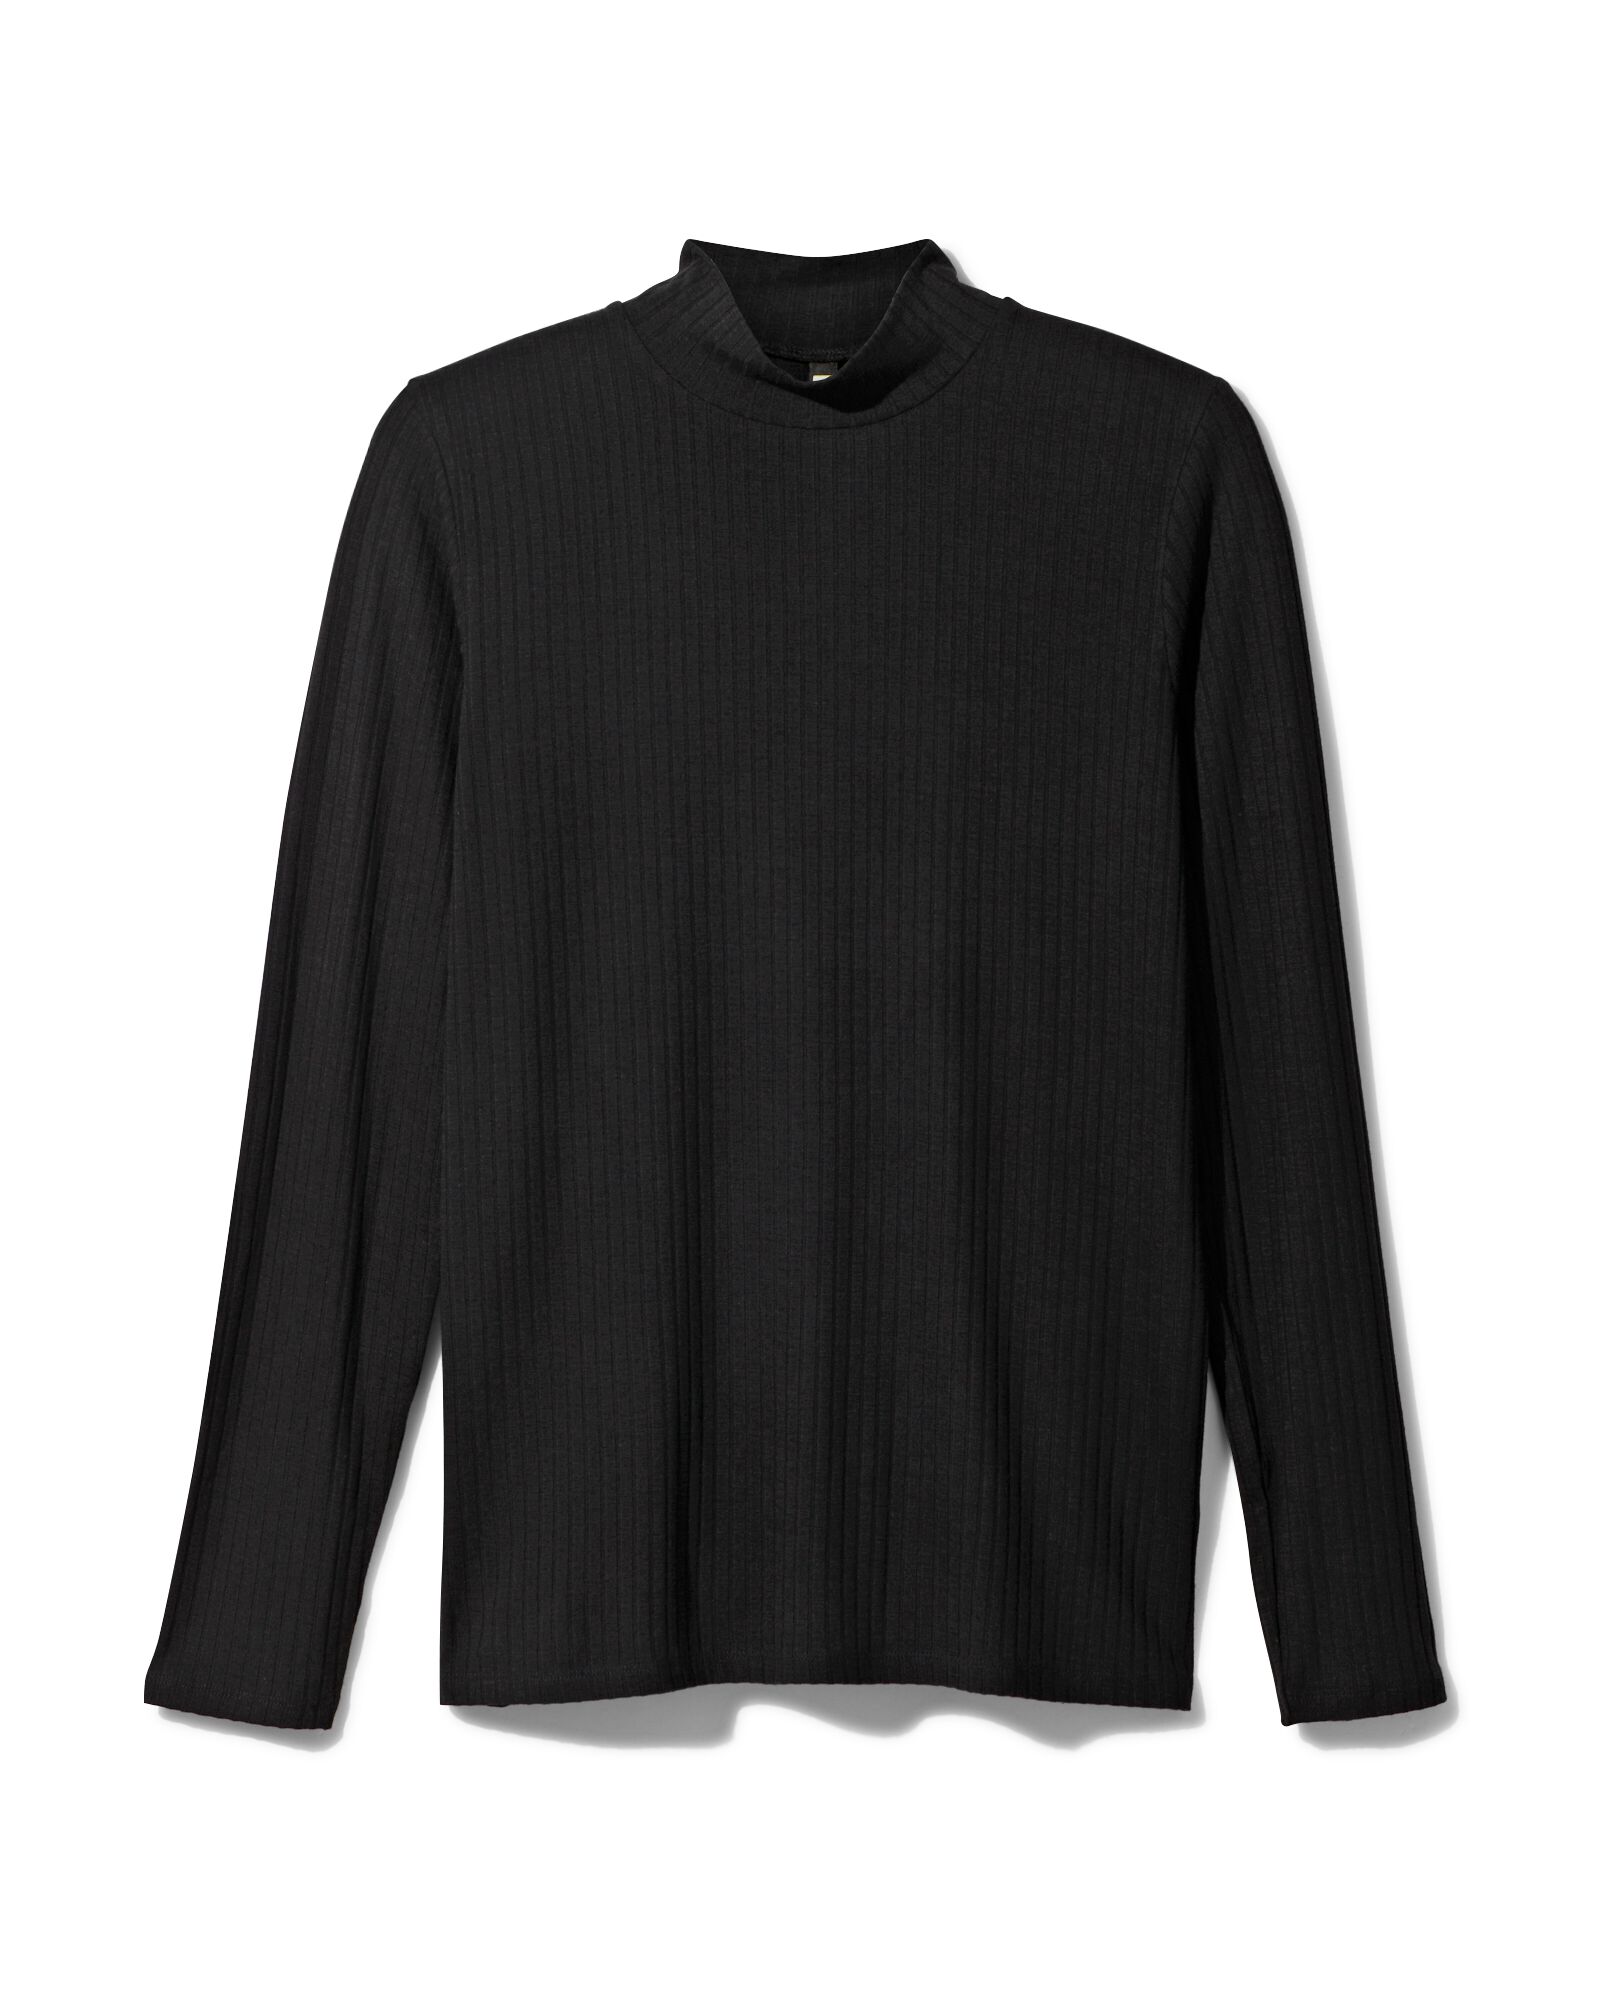 Damen-Shirt Chelsea, gerippt schwarz schwarz - 36297200BLACK - HEMA